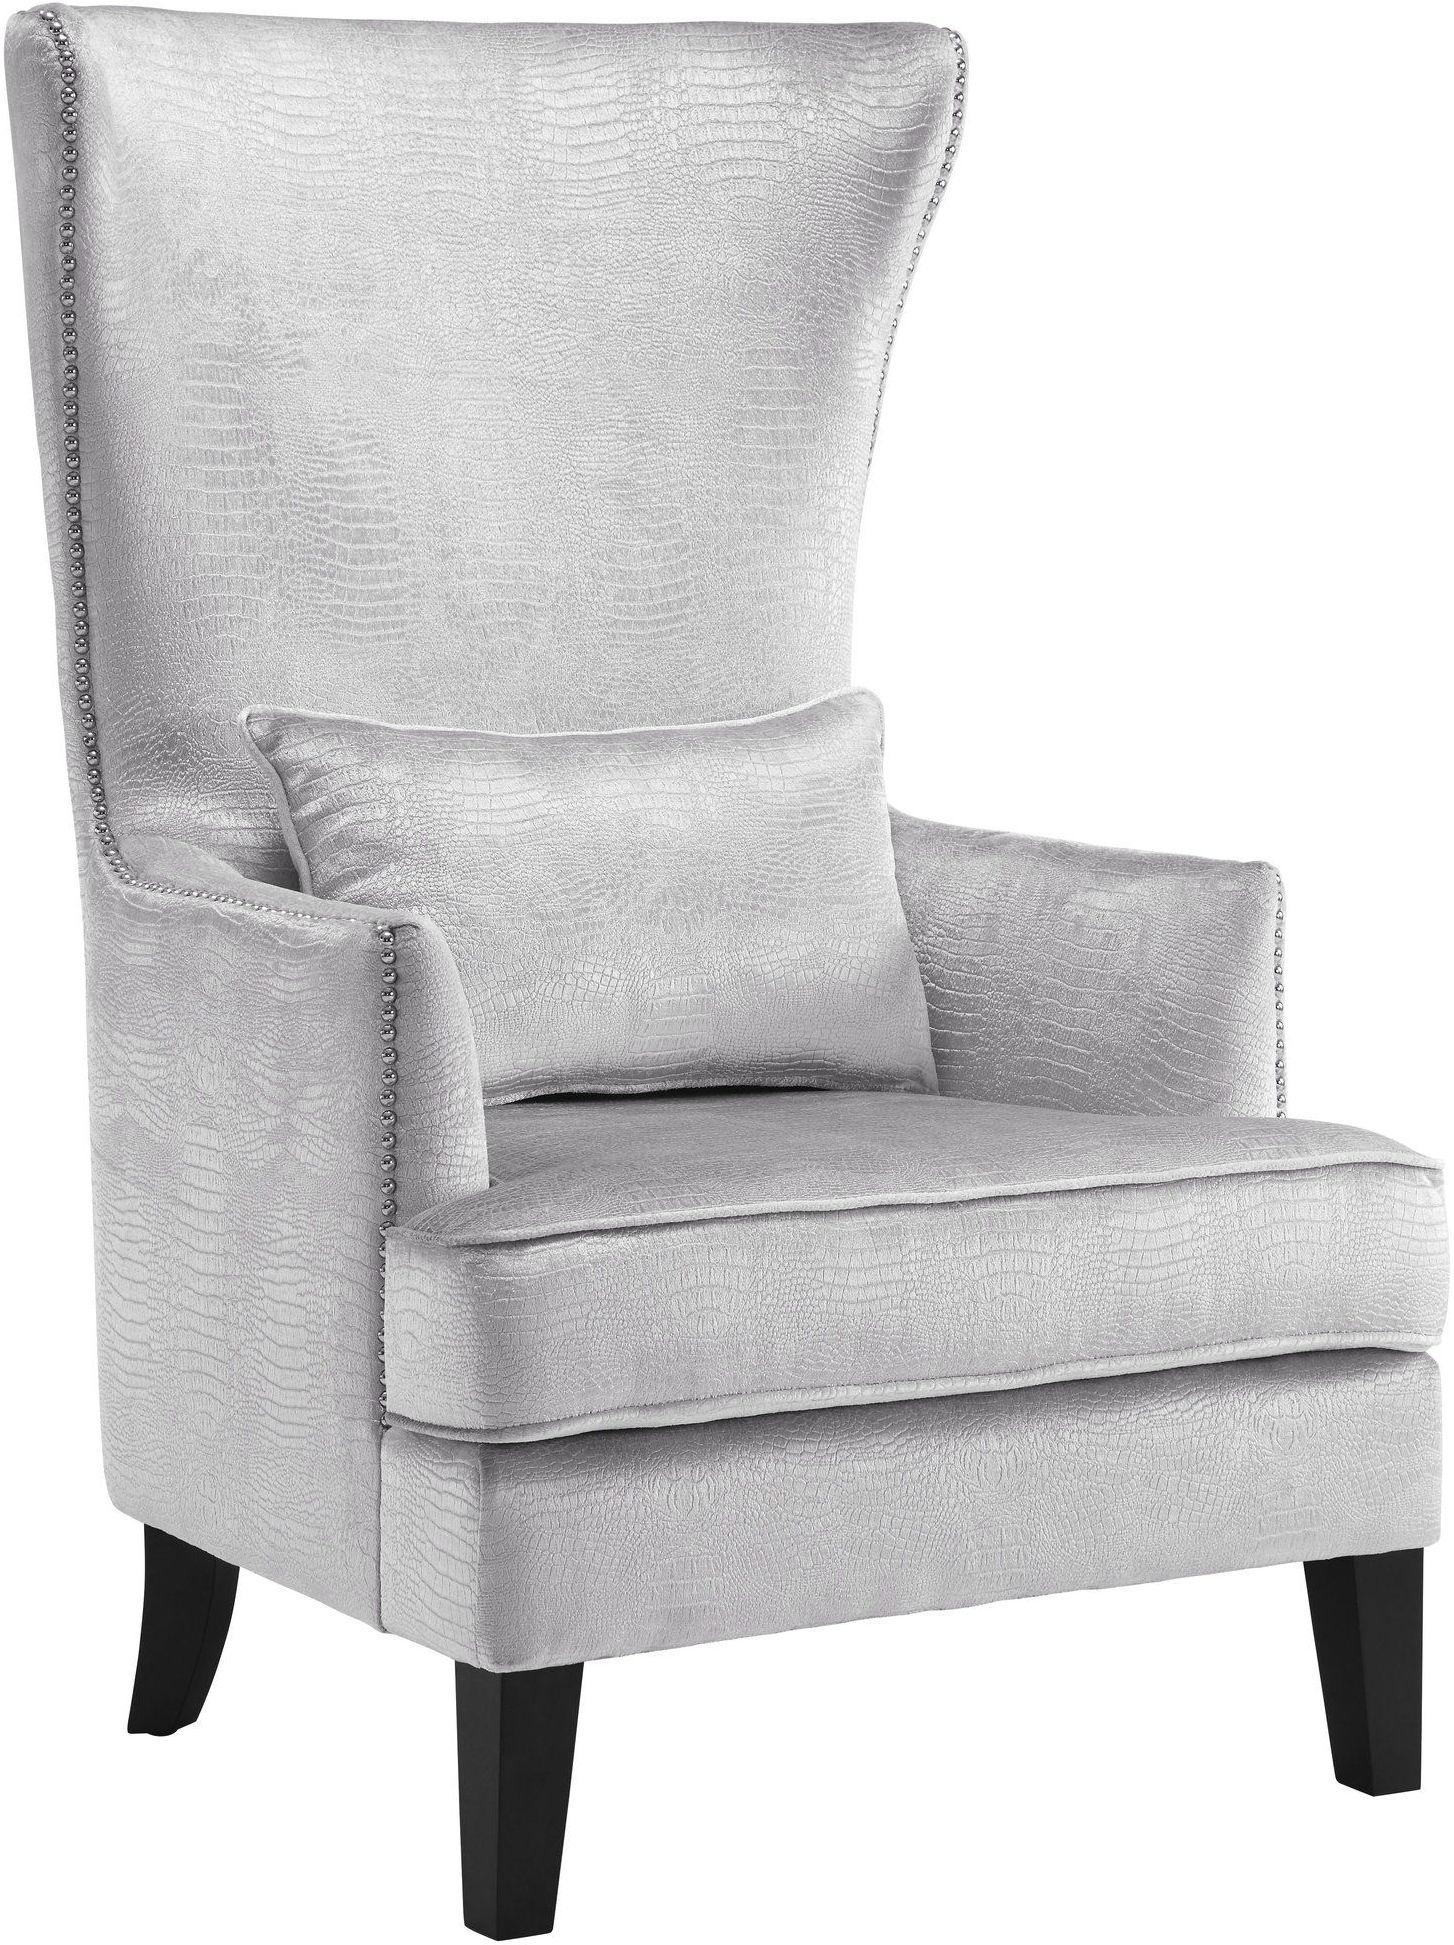 Tov Furniture Bristol Silver Croc Tall Chair